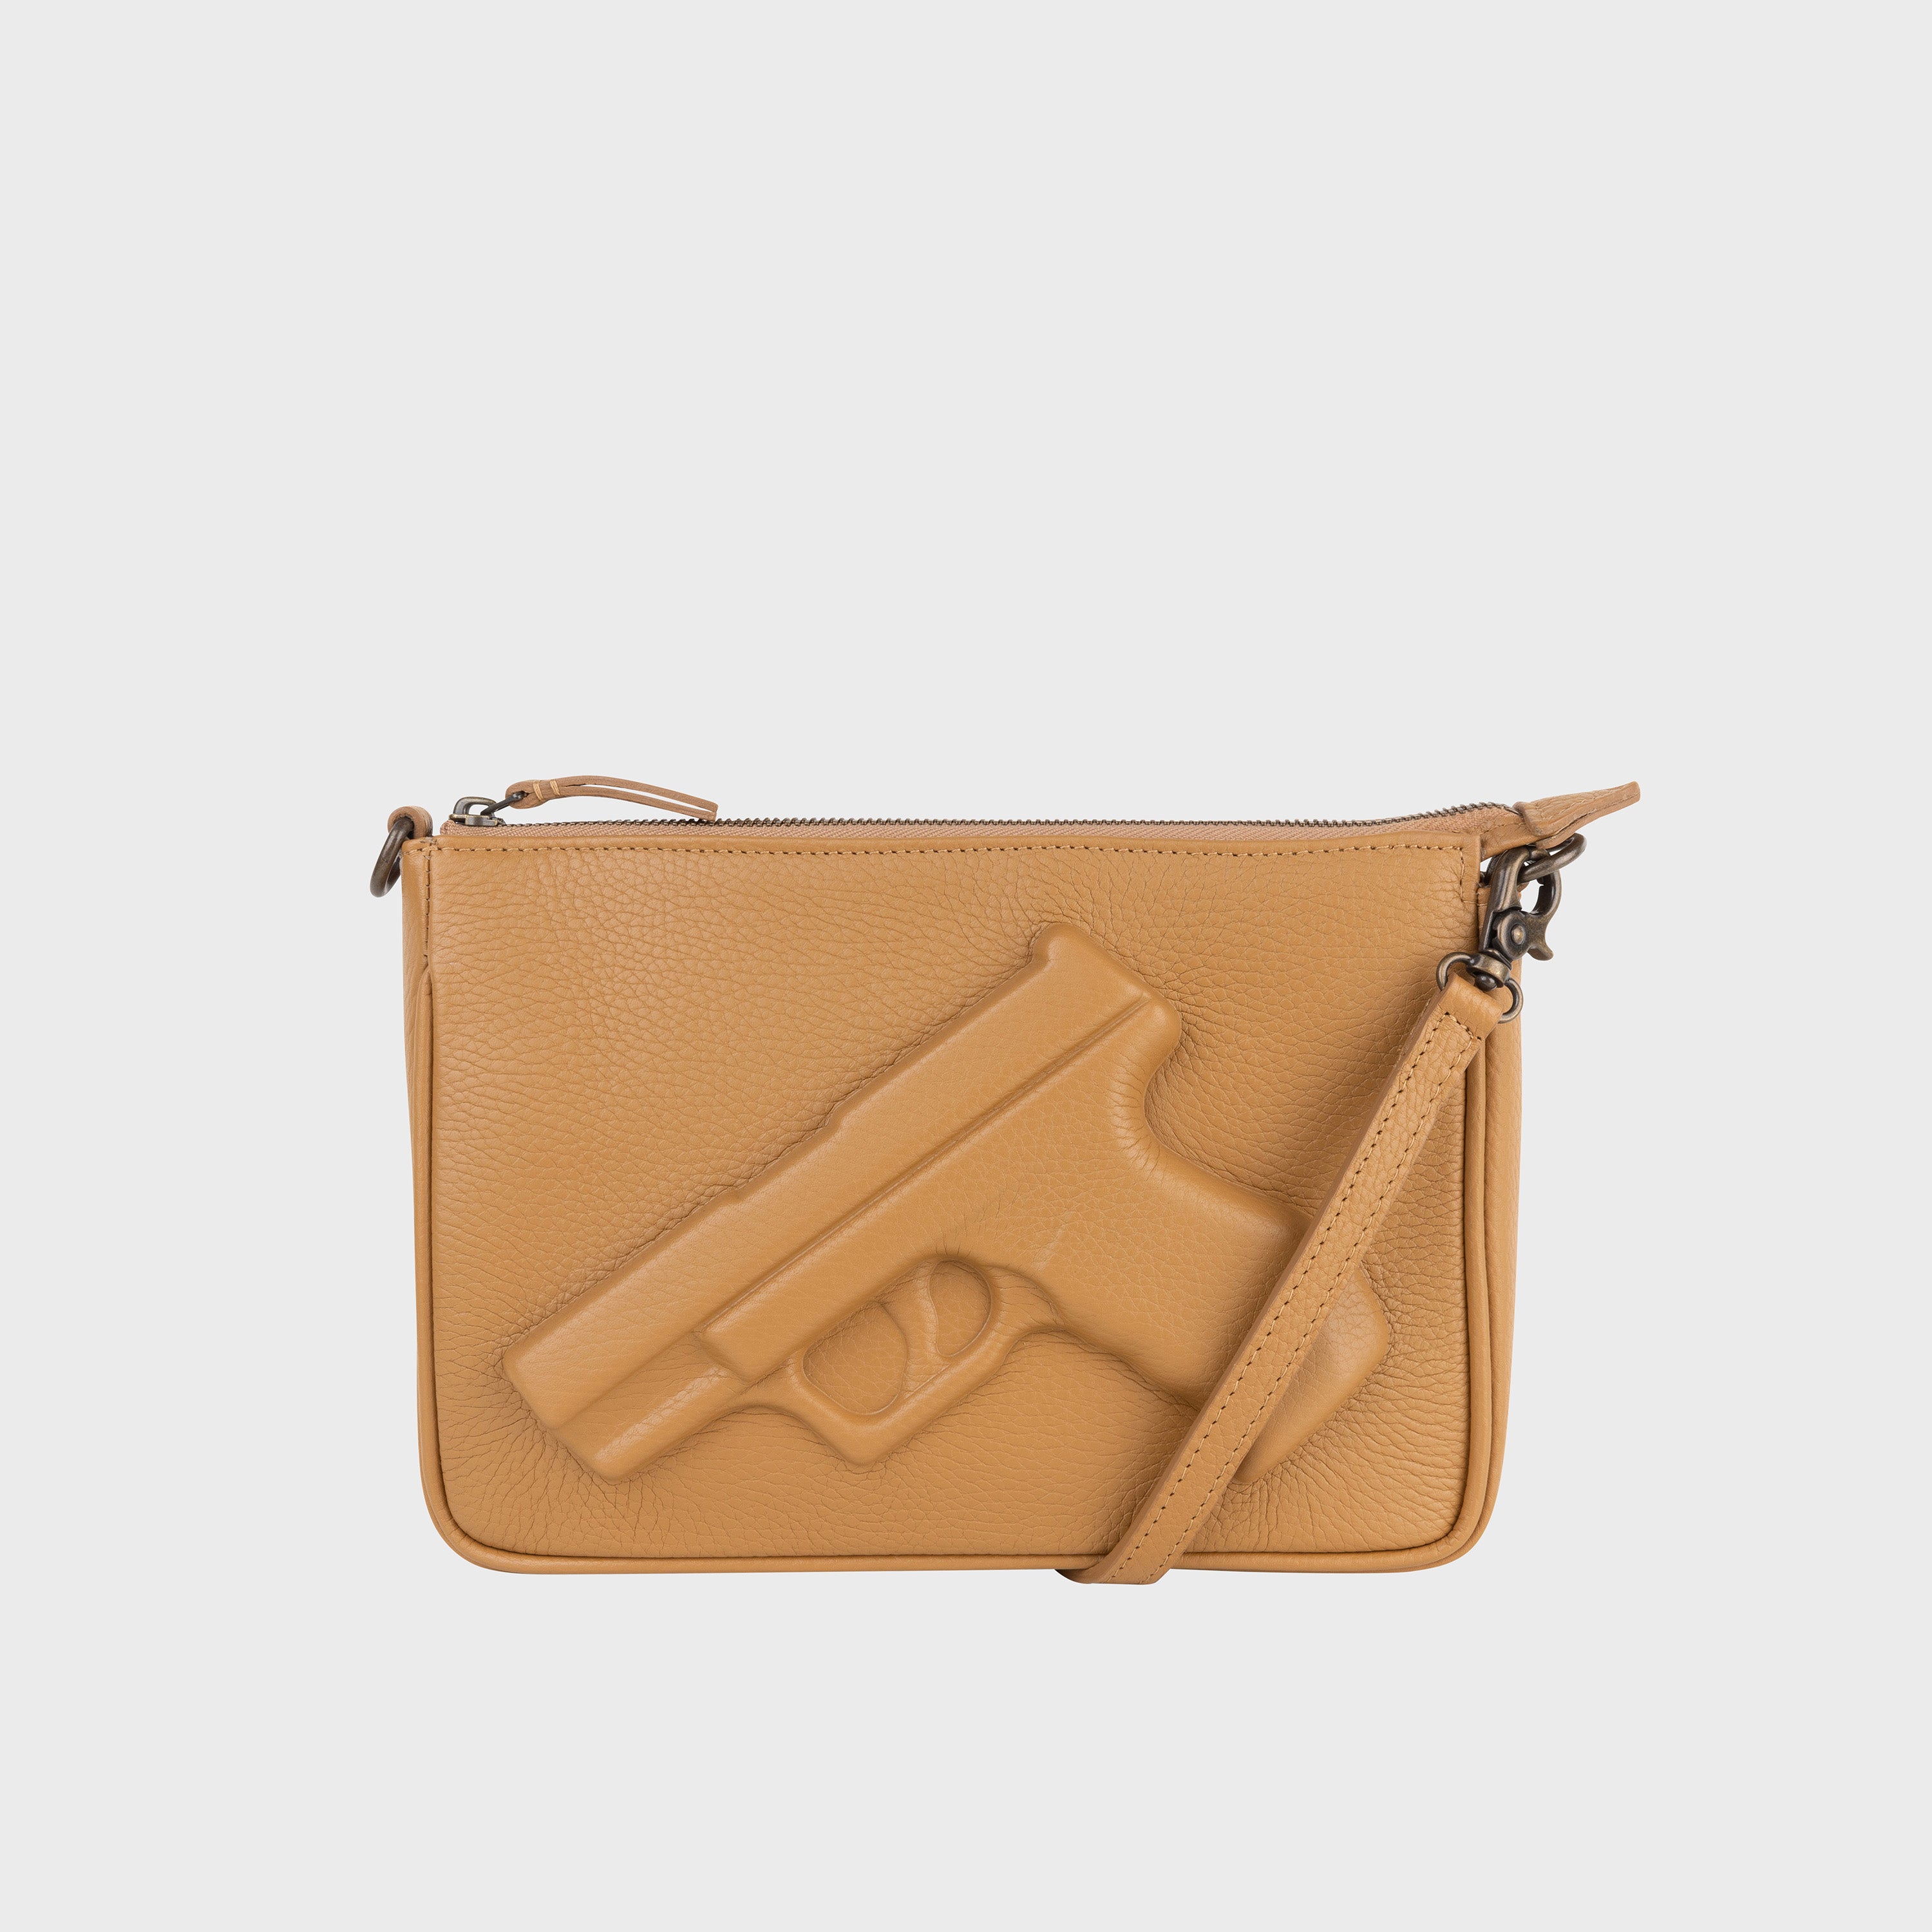 Vlieger & Vandam - Purse Gun Black, embossed leather gun bag